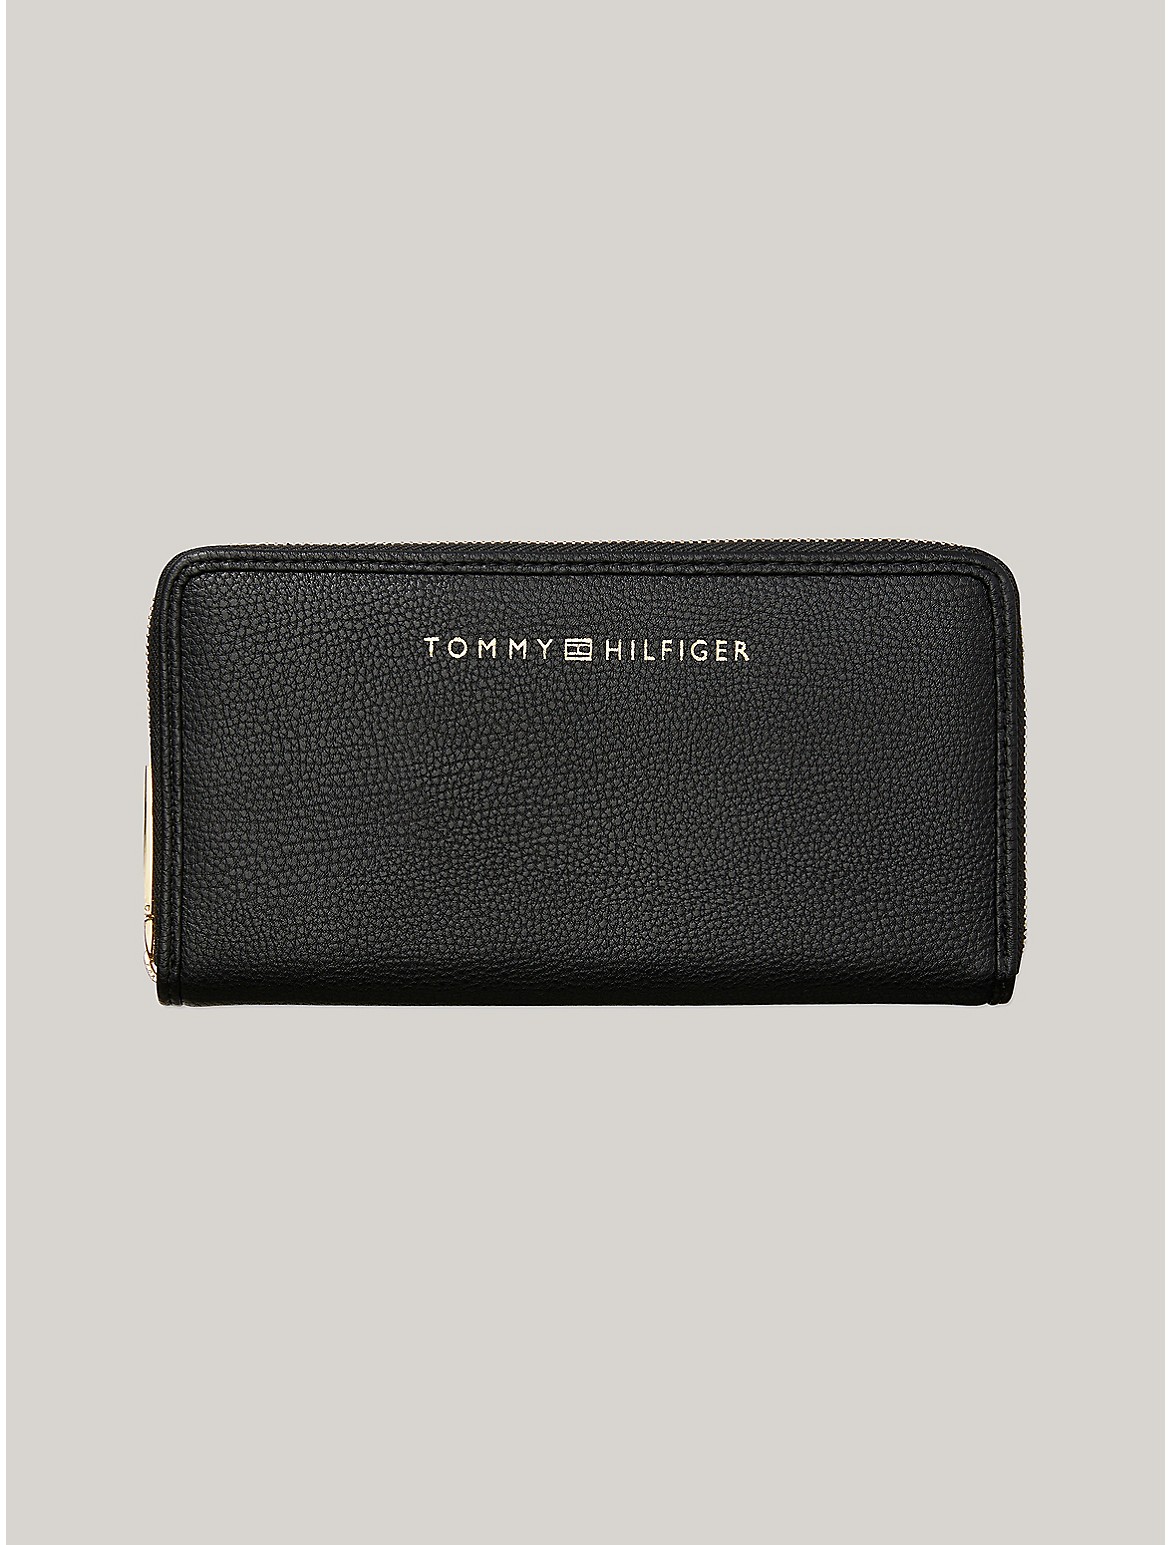 Tommy Hilfiger Women's Large Zip Wallet - Black